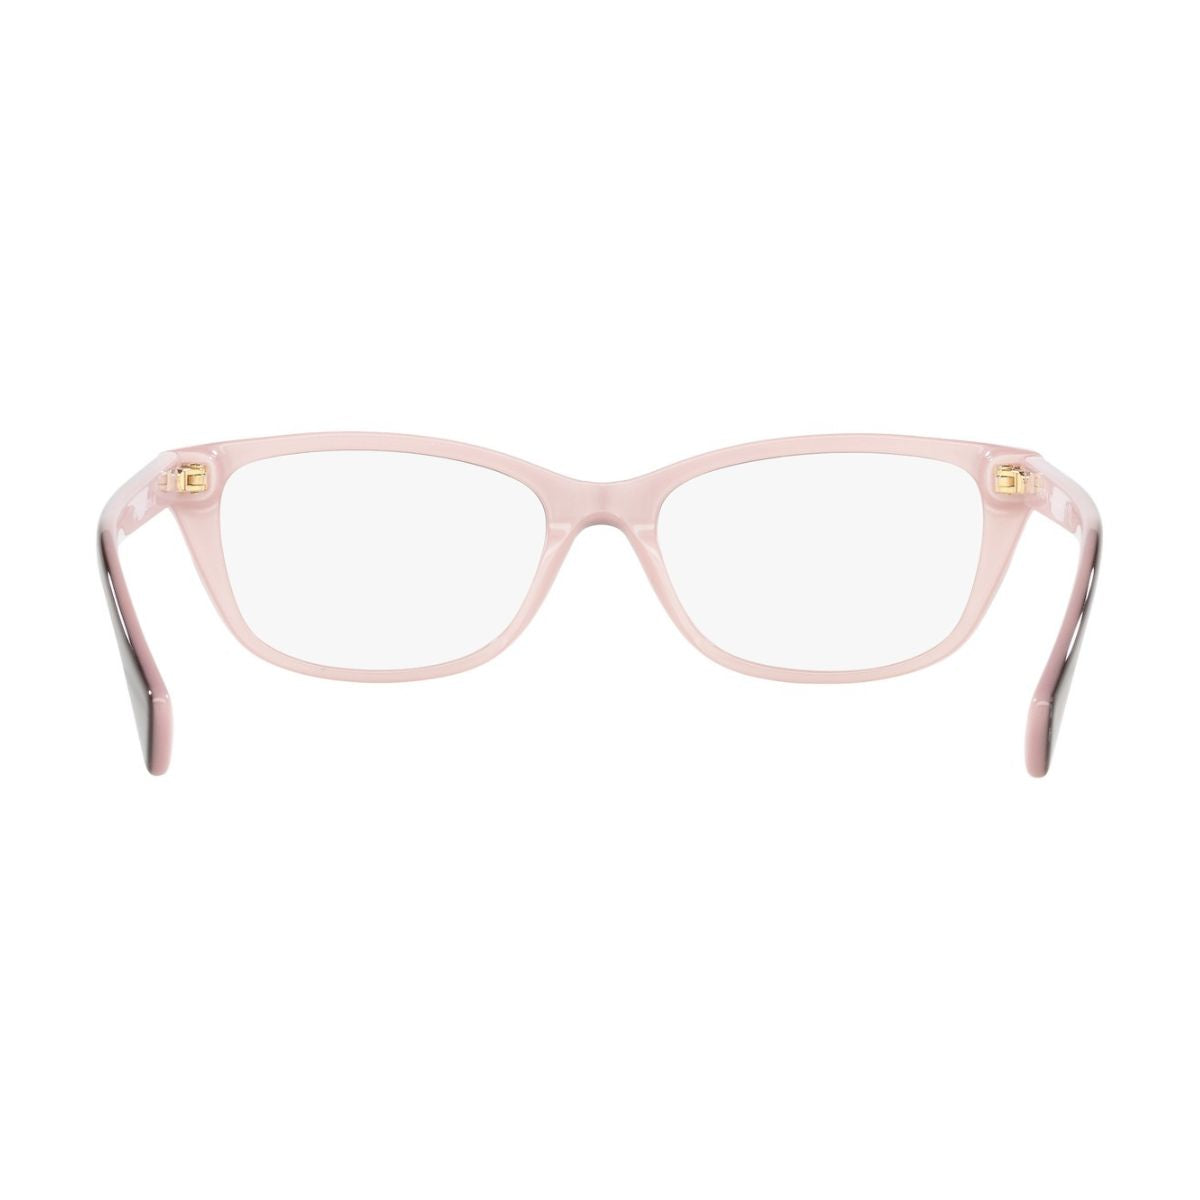 "stylish Ralph Lauren 7126 599 trendy eyewear frame for women's at optorium"